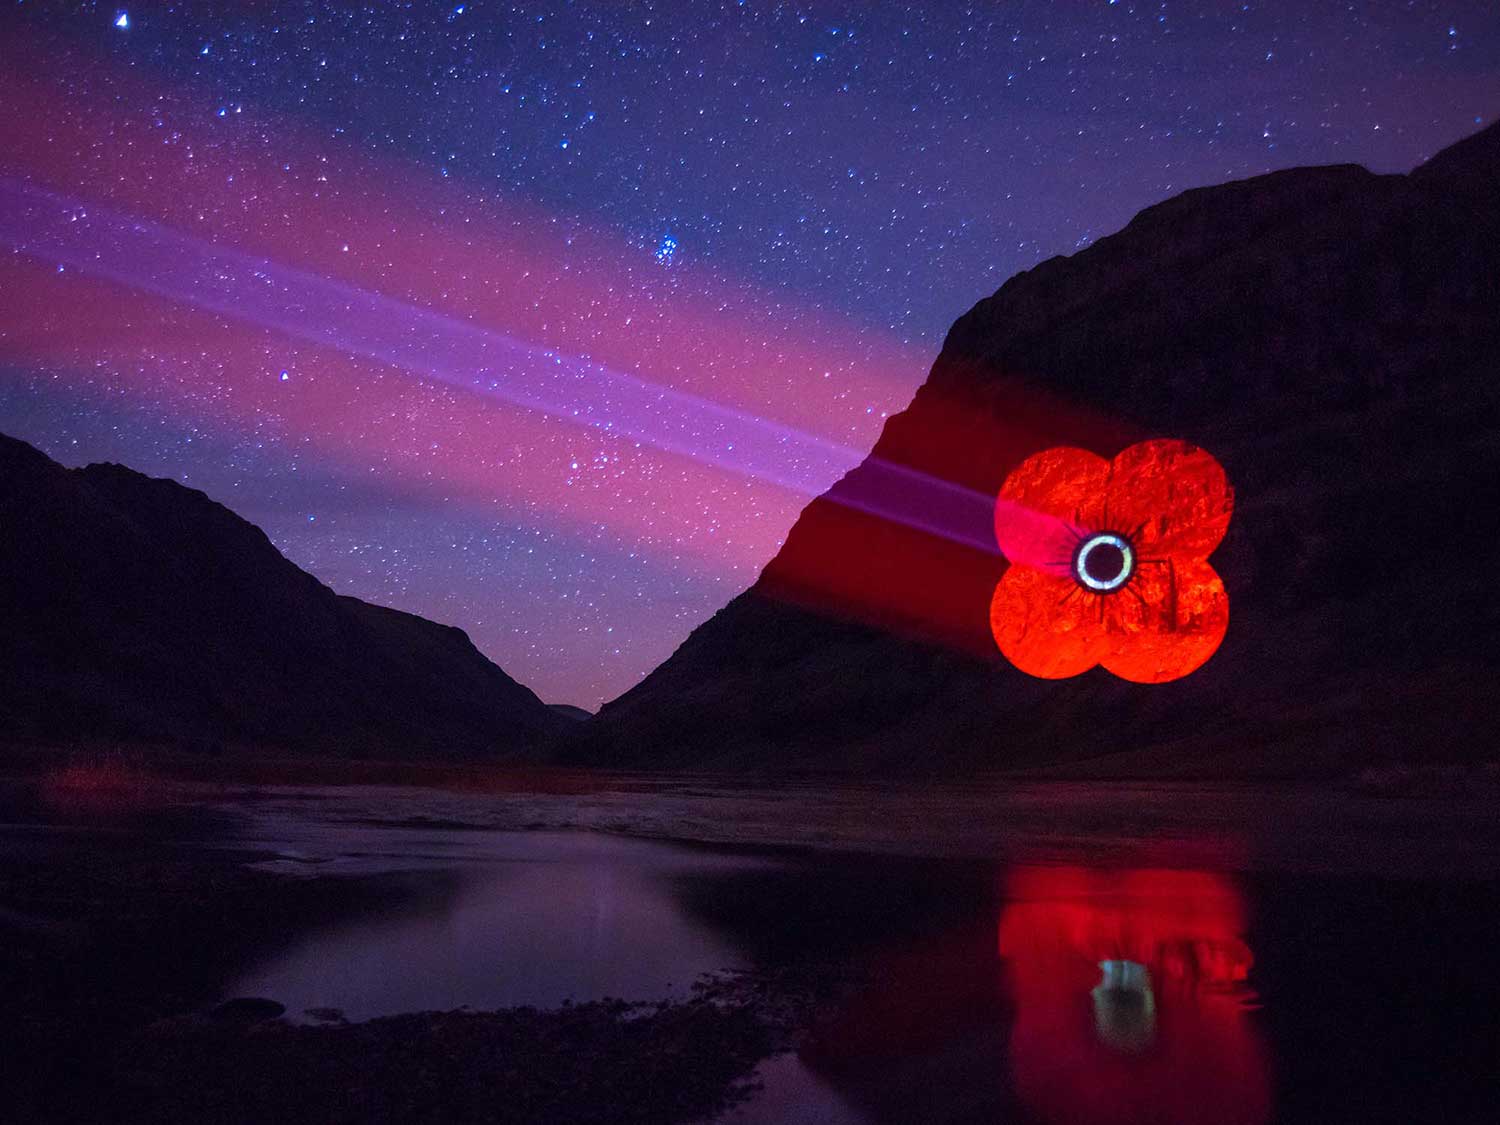 Poppy Scotland logo Guerrilla Projections onto Mountain in Glencoe